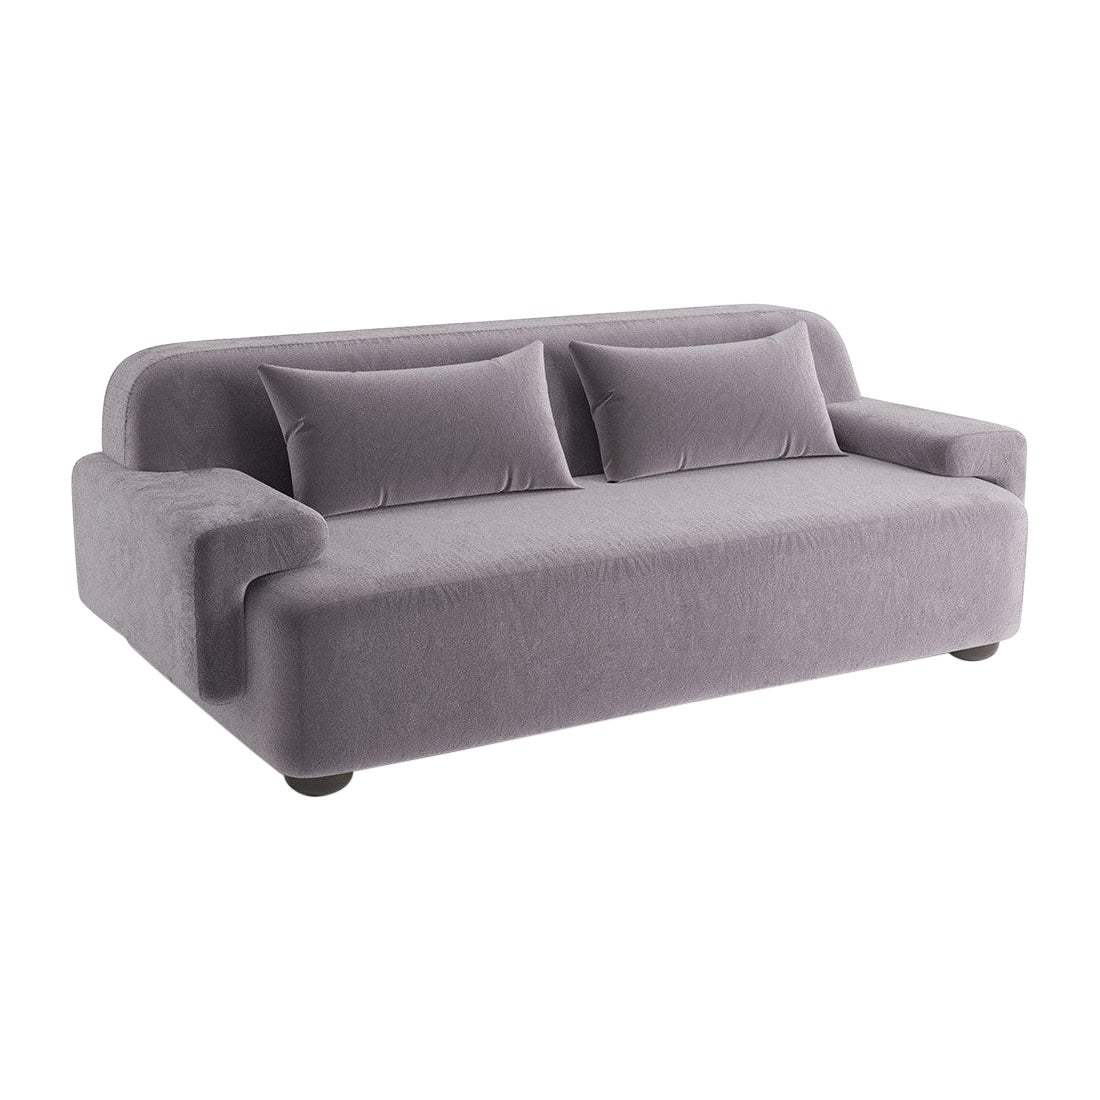 Popus Editions Lena 3 Seater Sofa in Gray Verone Velvet Upholstery